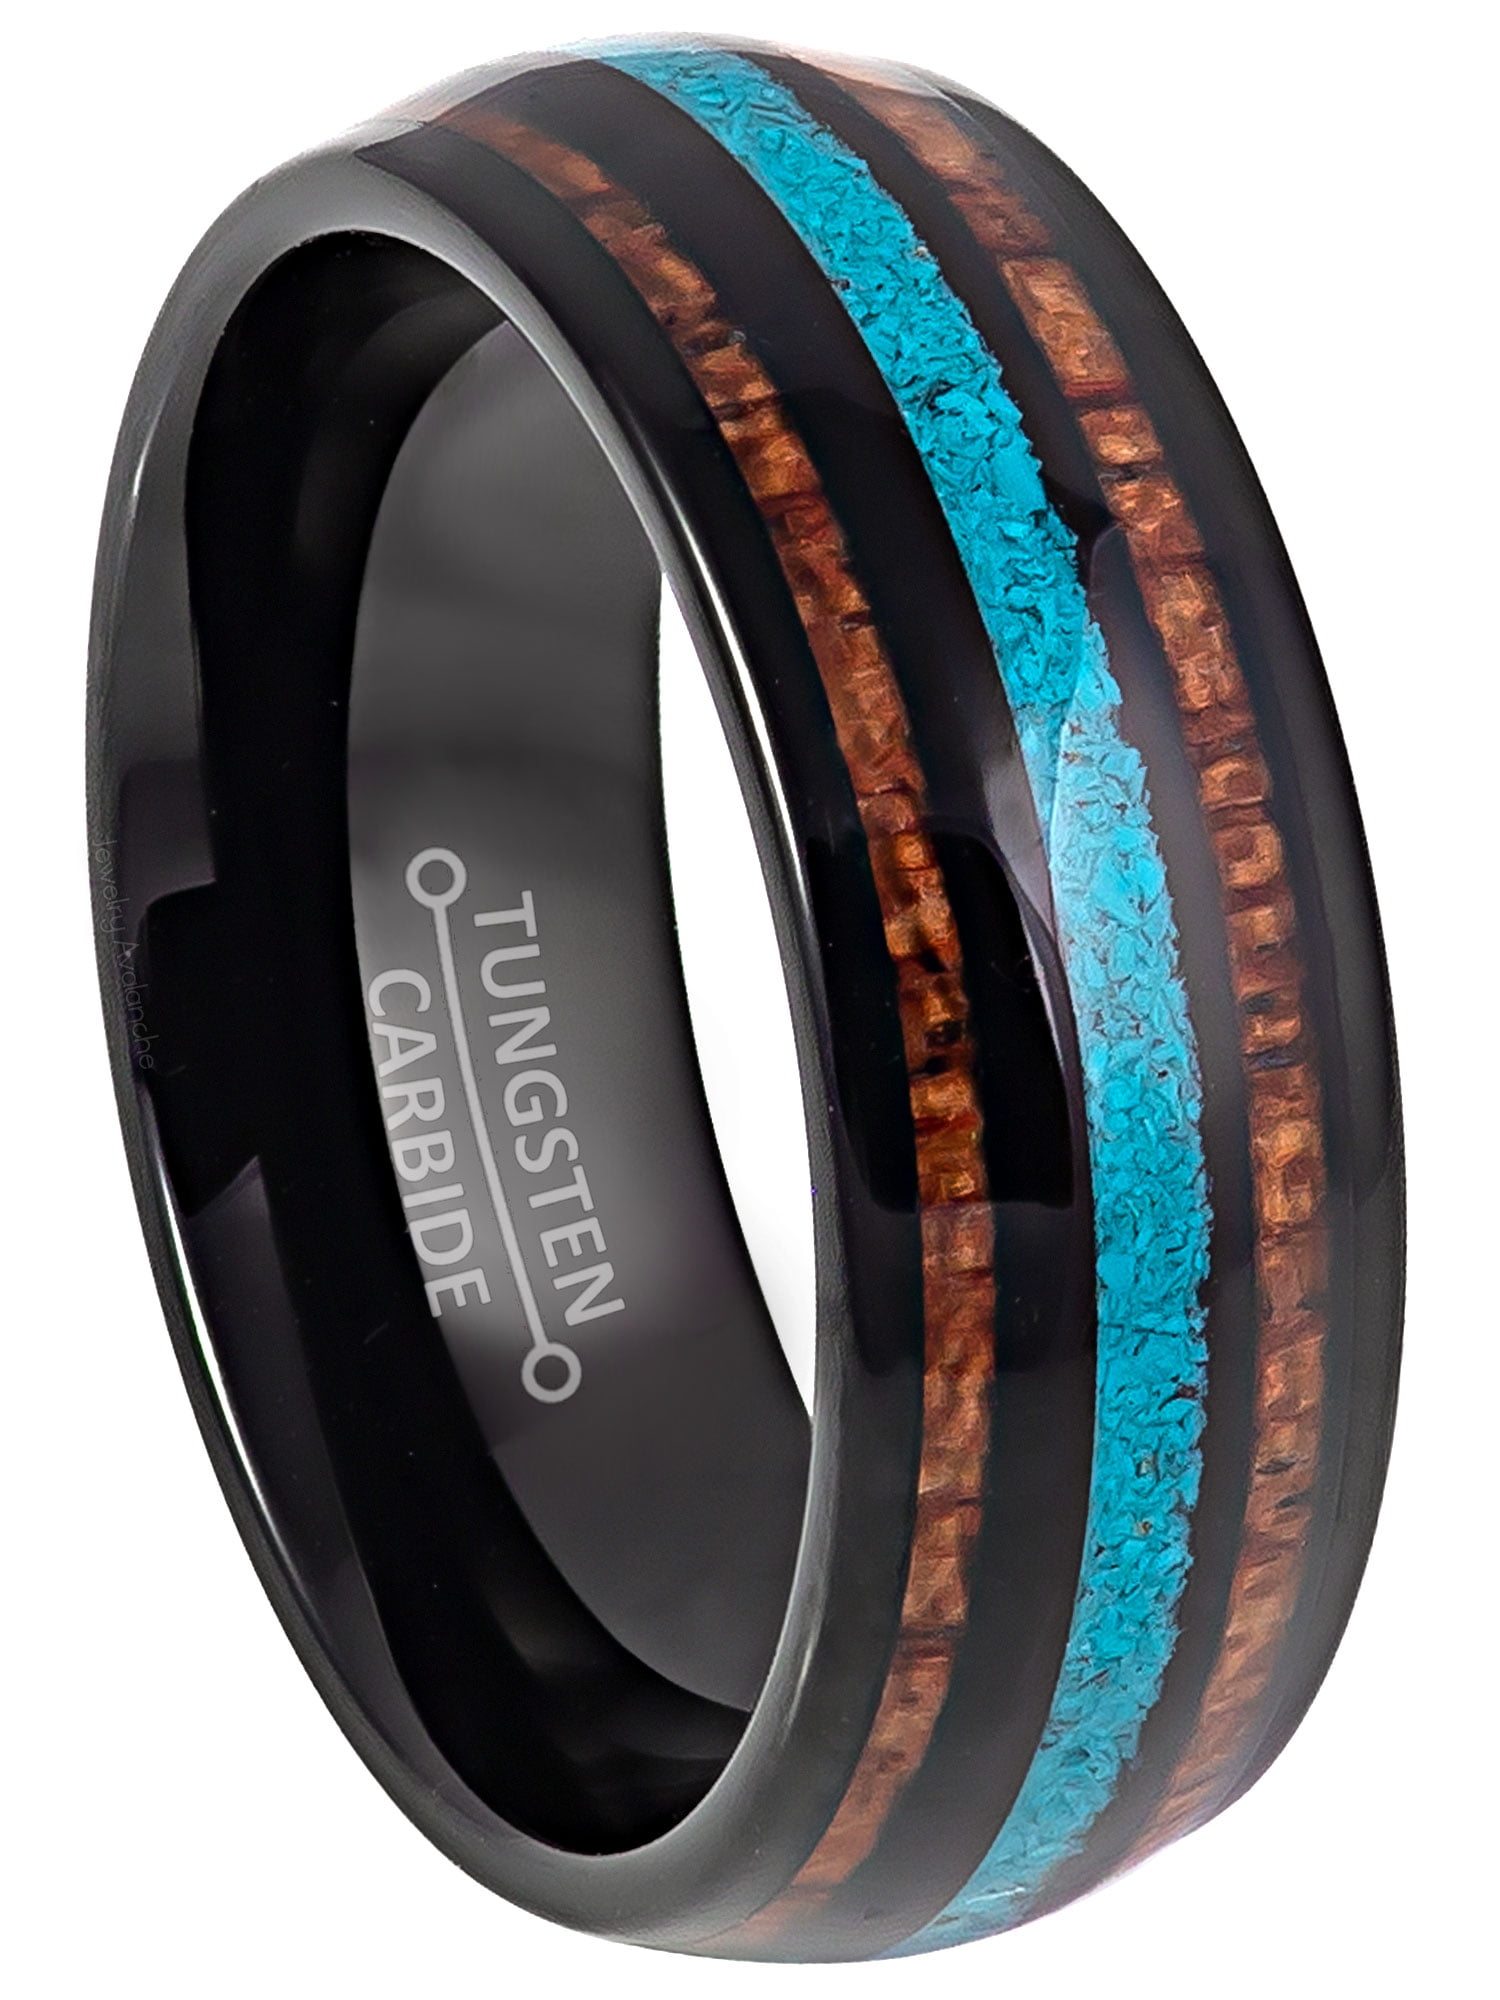 BLACK Tungsten Ring Koa Wood Inlay Grain Leaf Edge Wedding Band Women jewelry